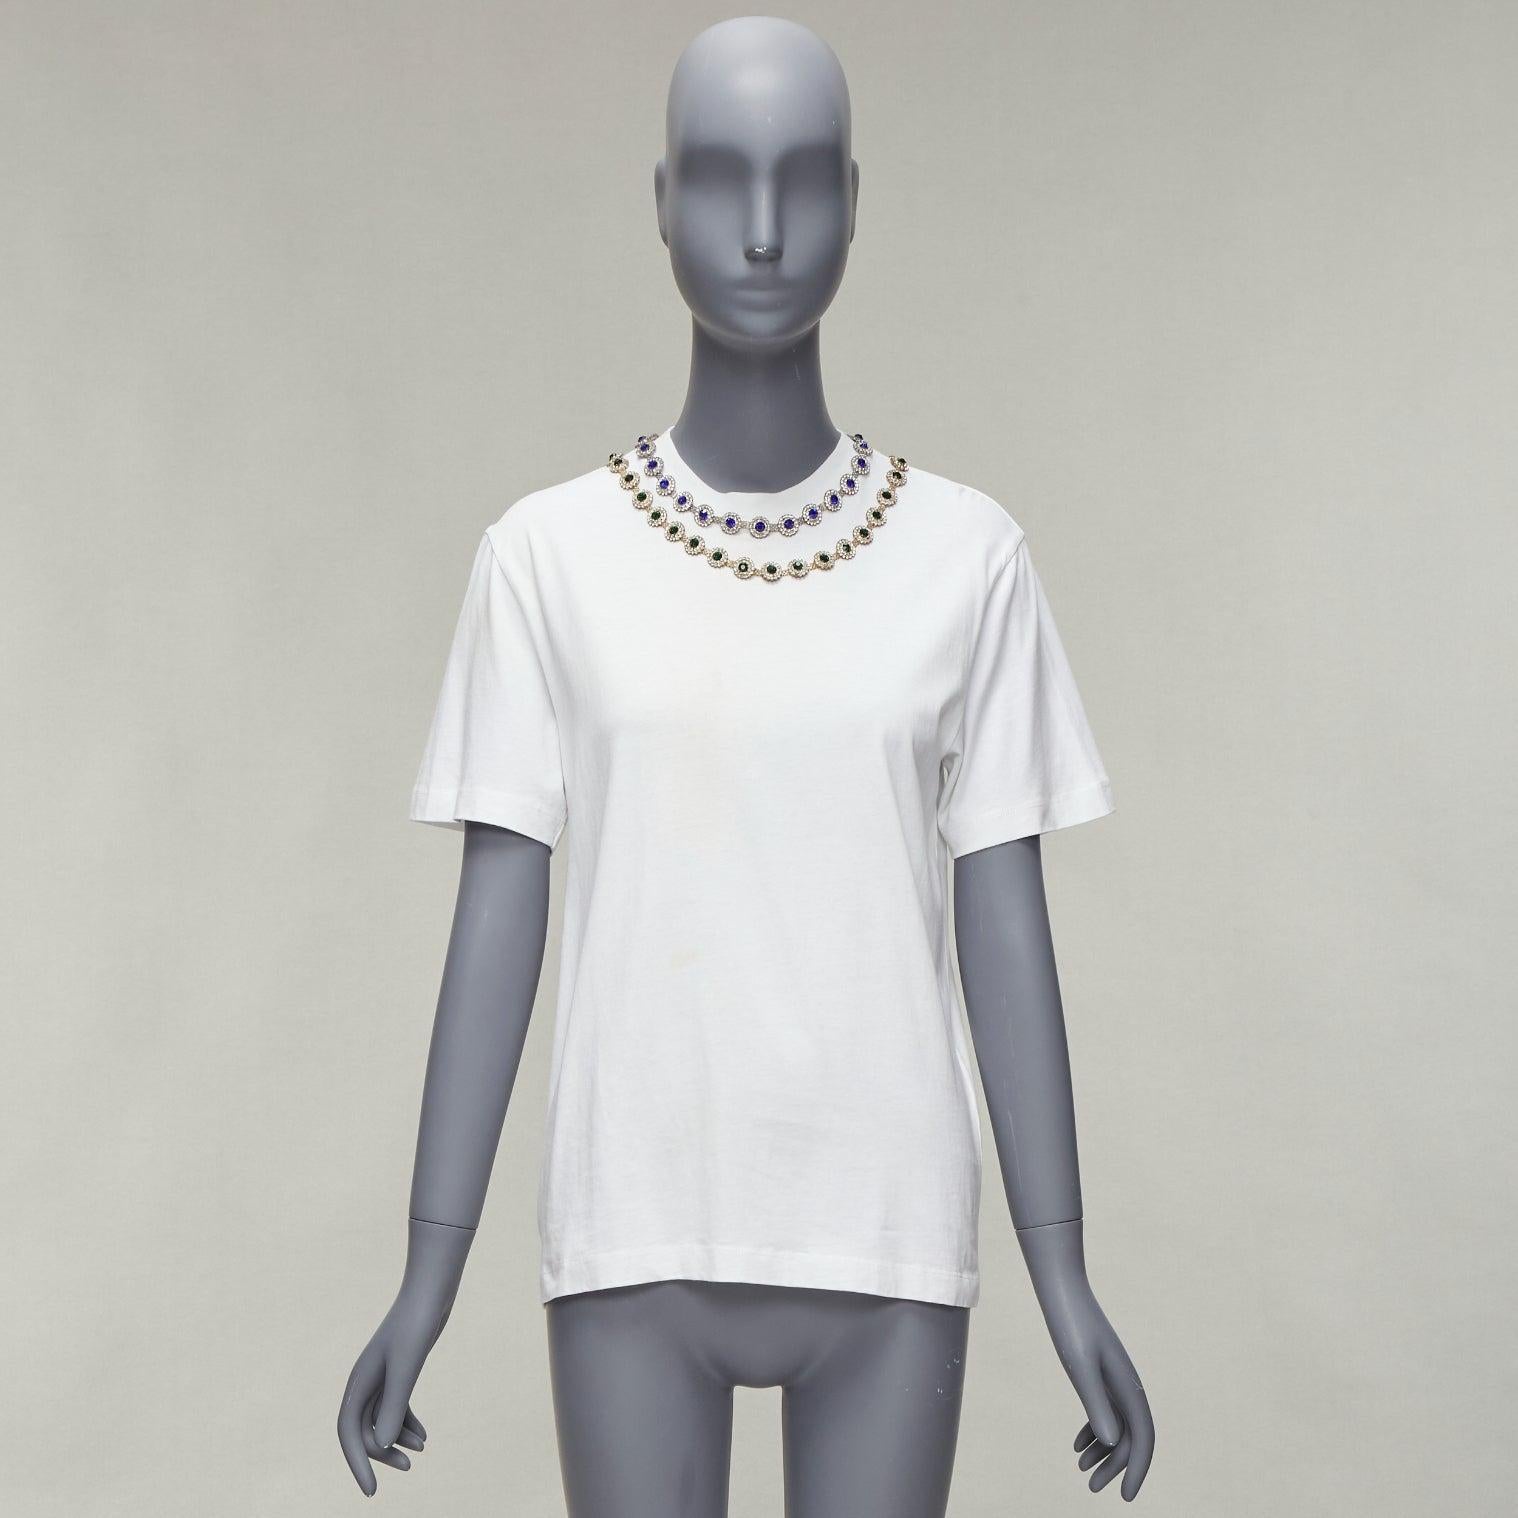 CHRISTOPHER KANE white cotton mixed rhinestone tromp loeil necklace white tshirt For Sale 6